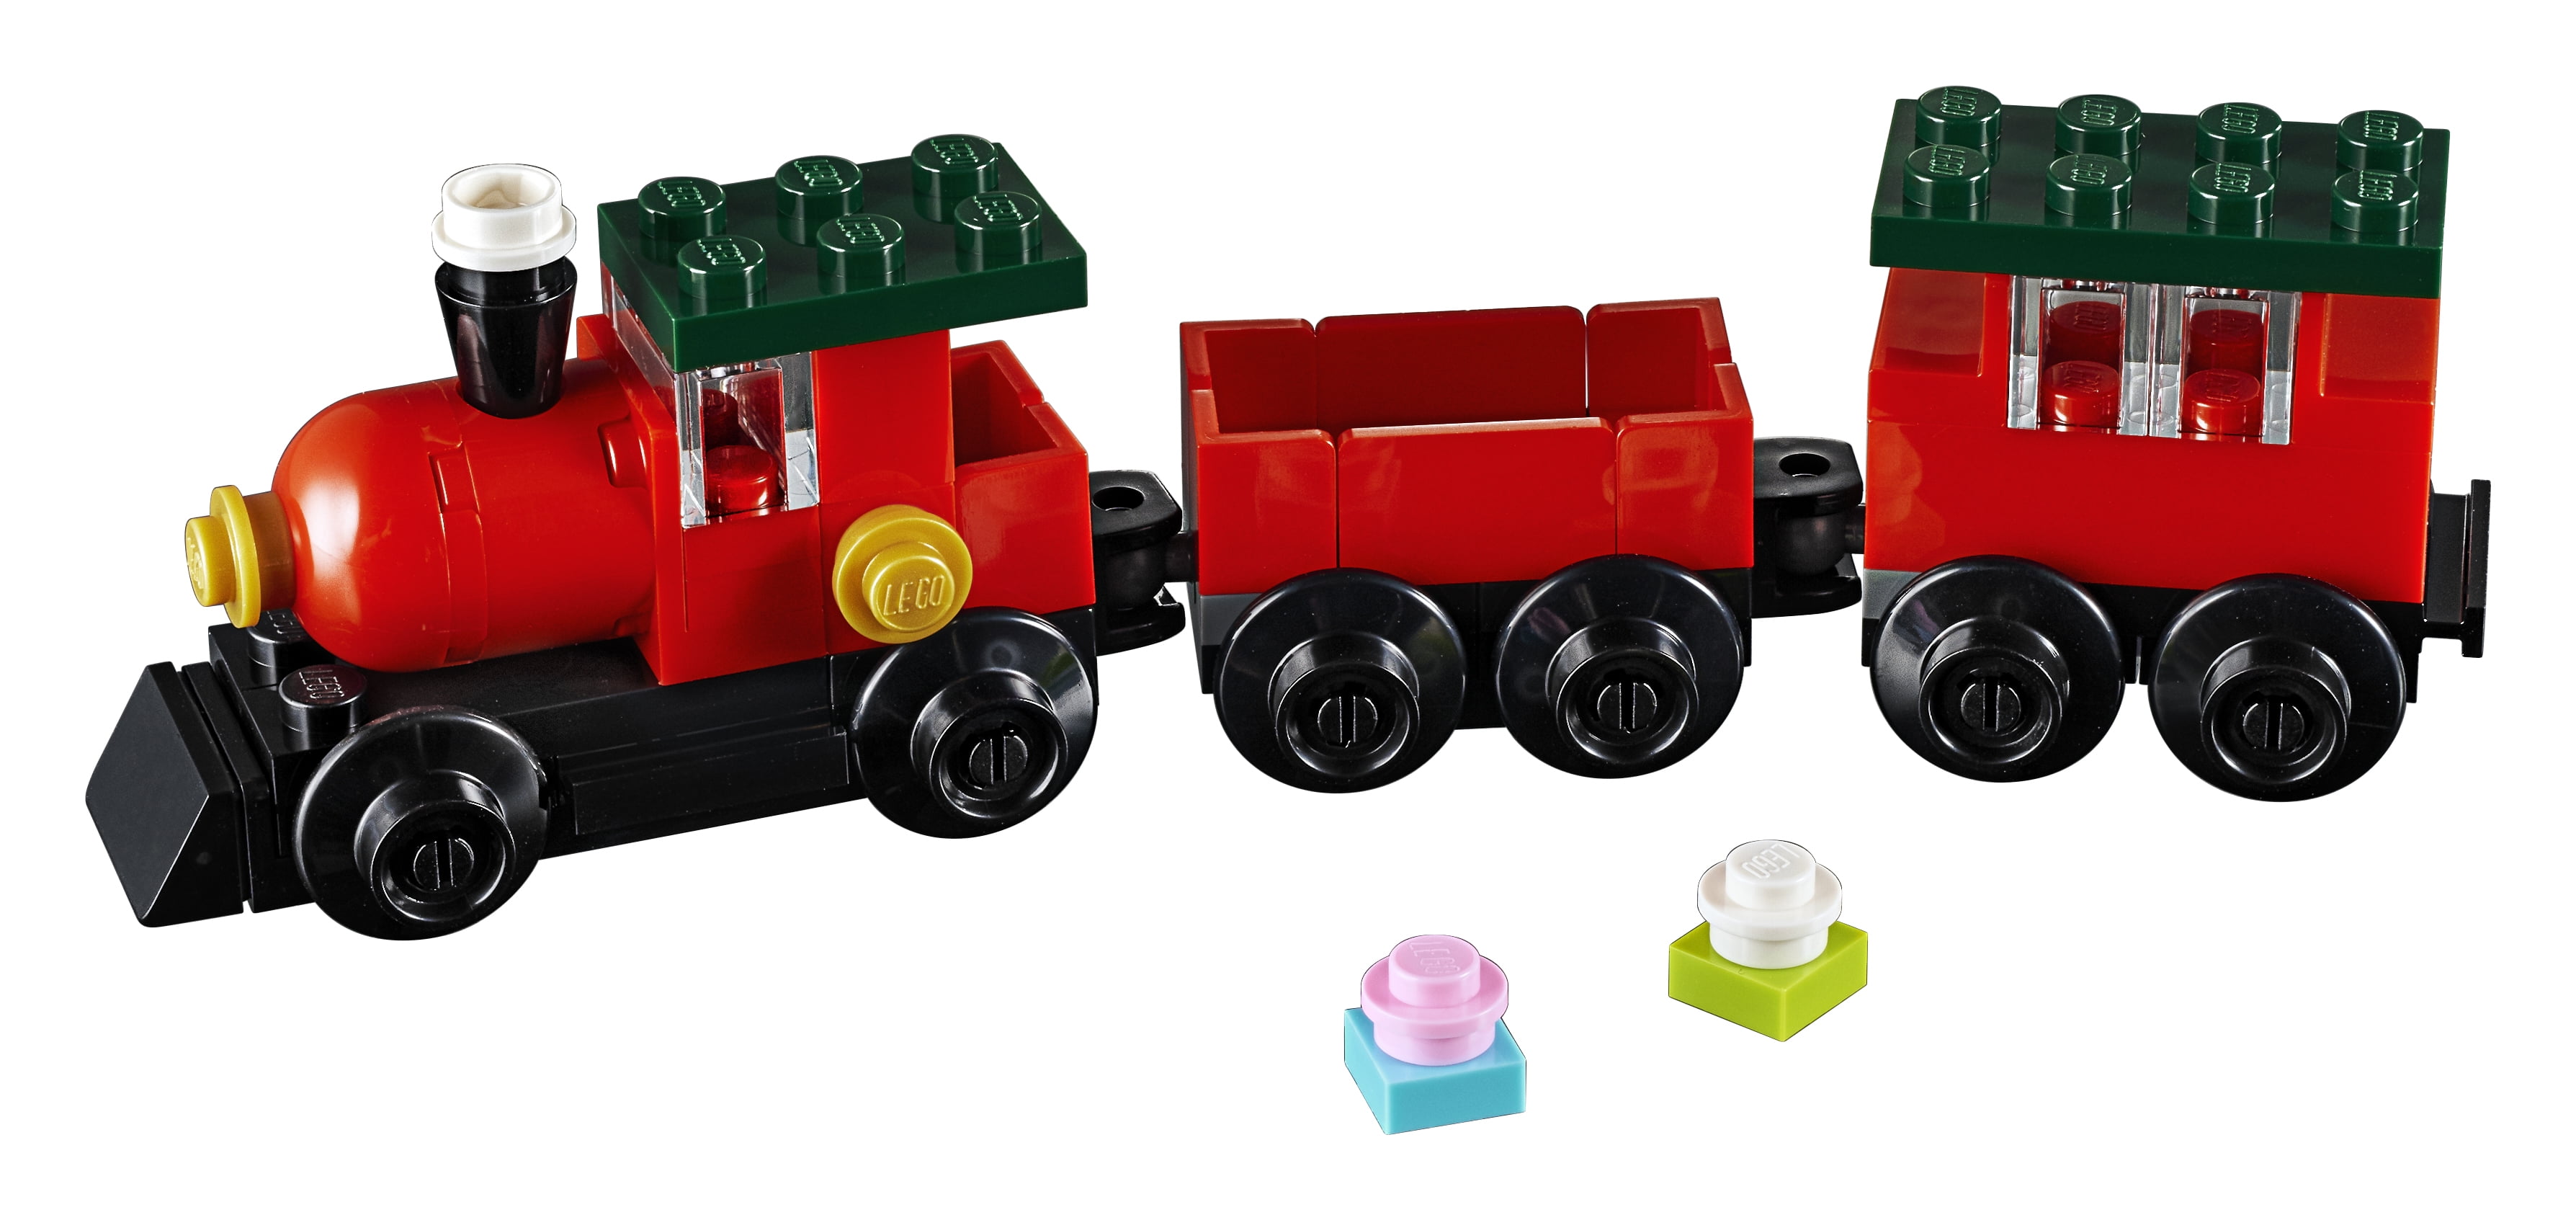 LEGO Creator Train 30543 Polybag (66 Pieces) -